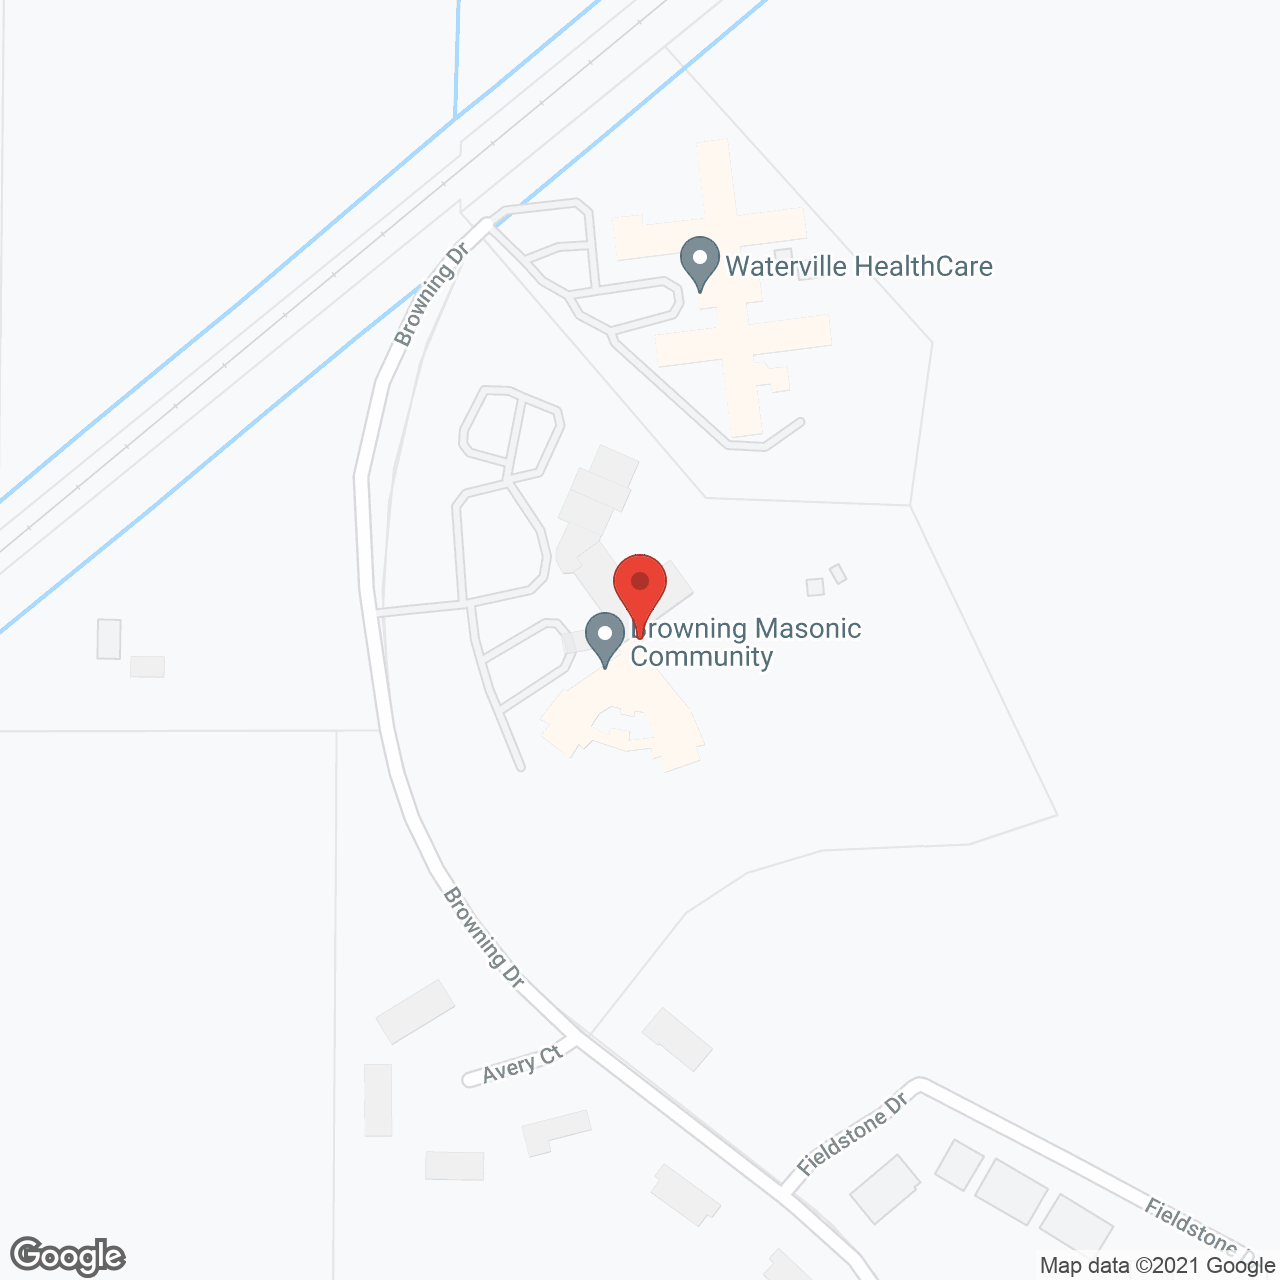 Browning Masonic Community in google map